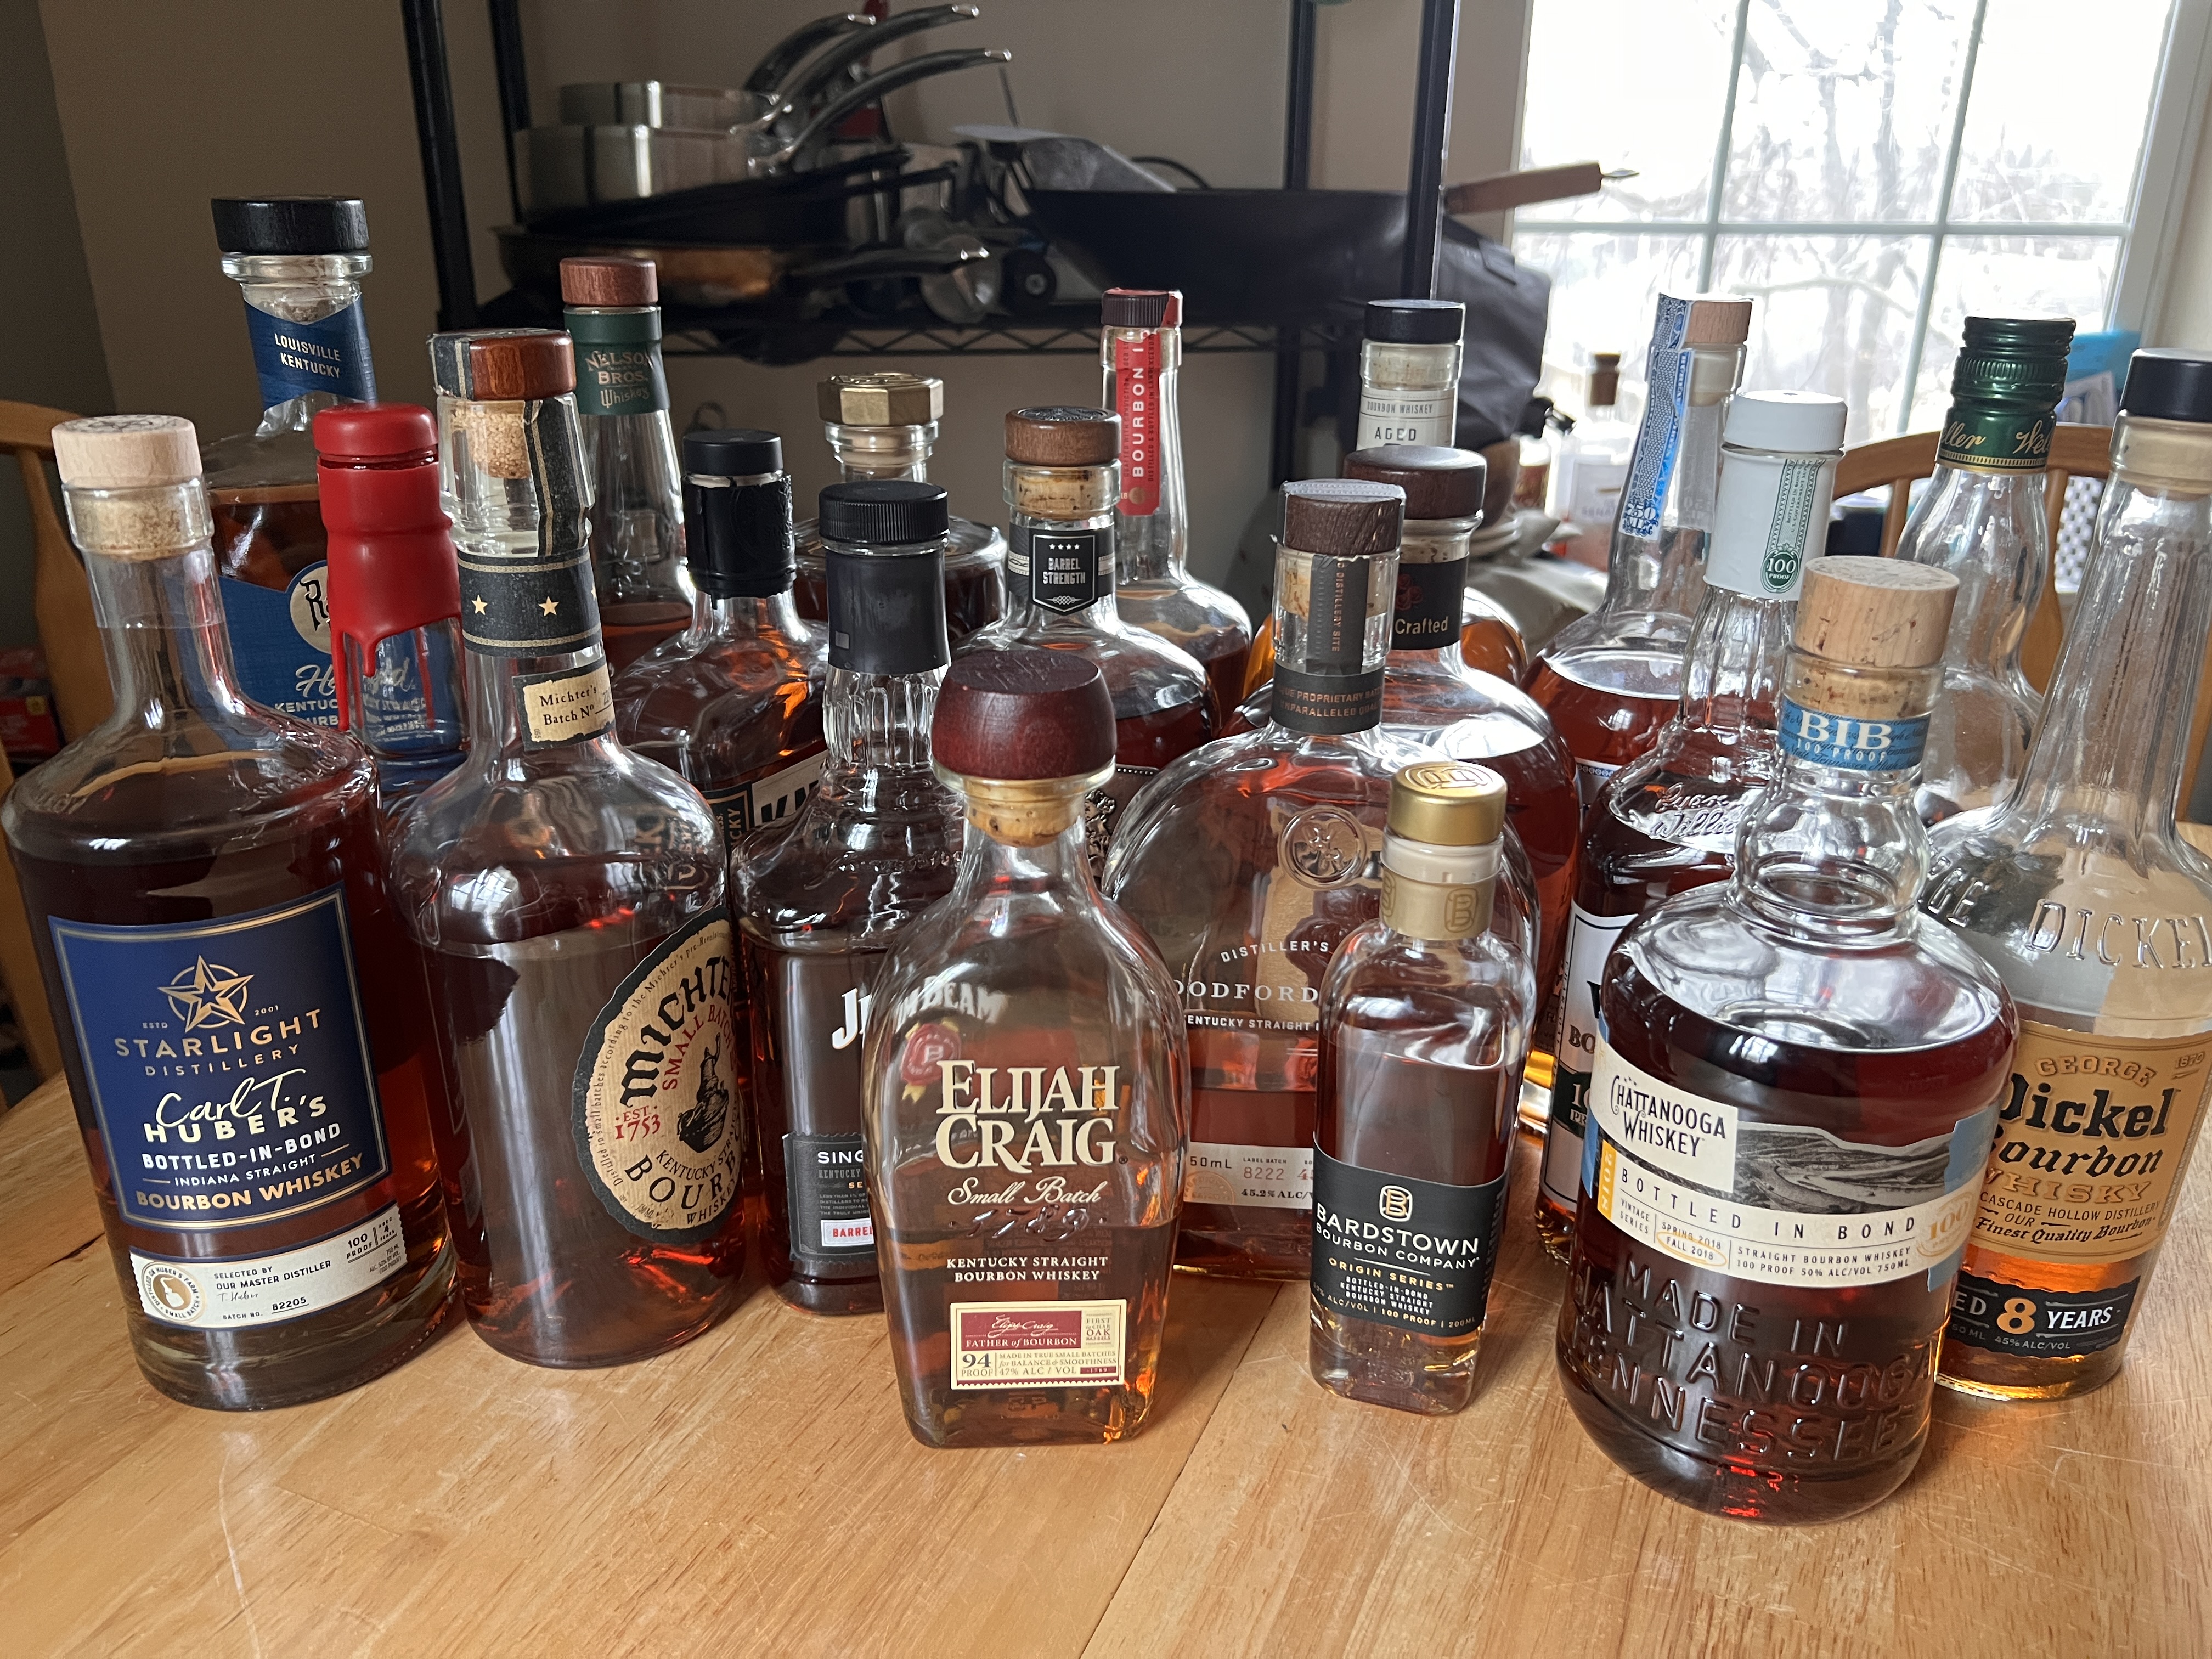 Classic Vs. New Bourbons